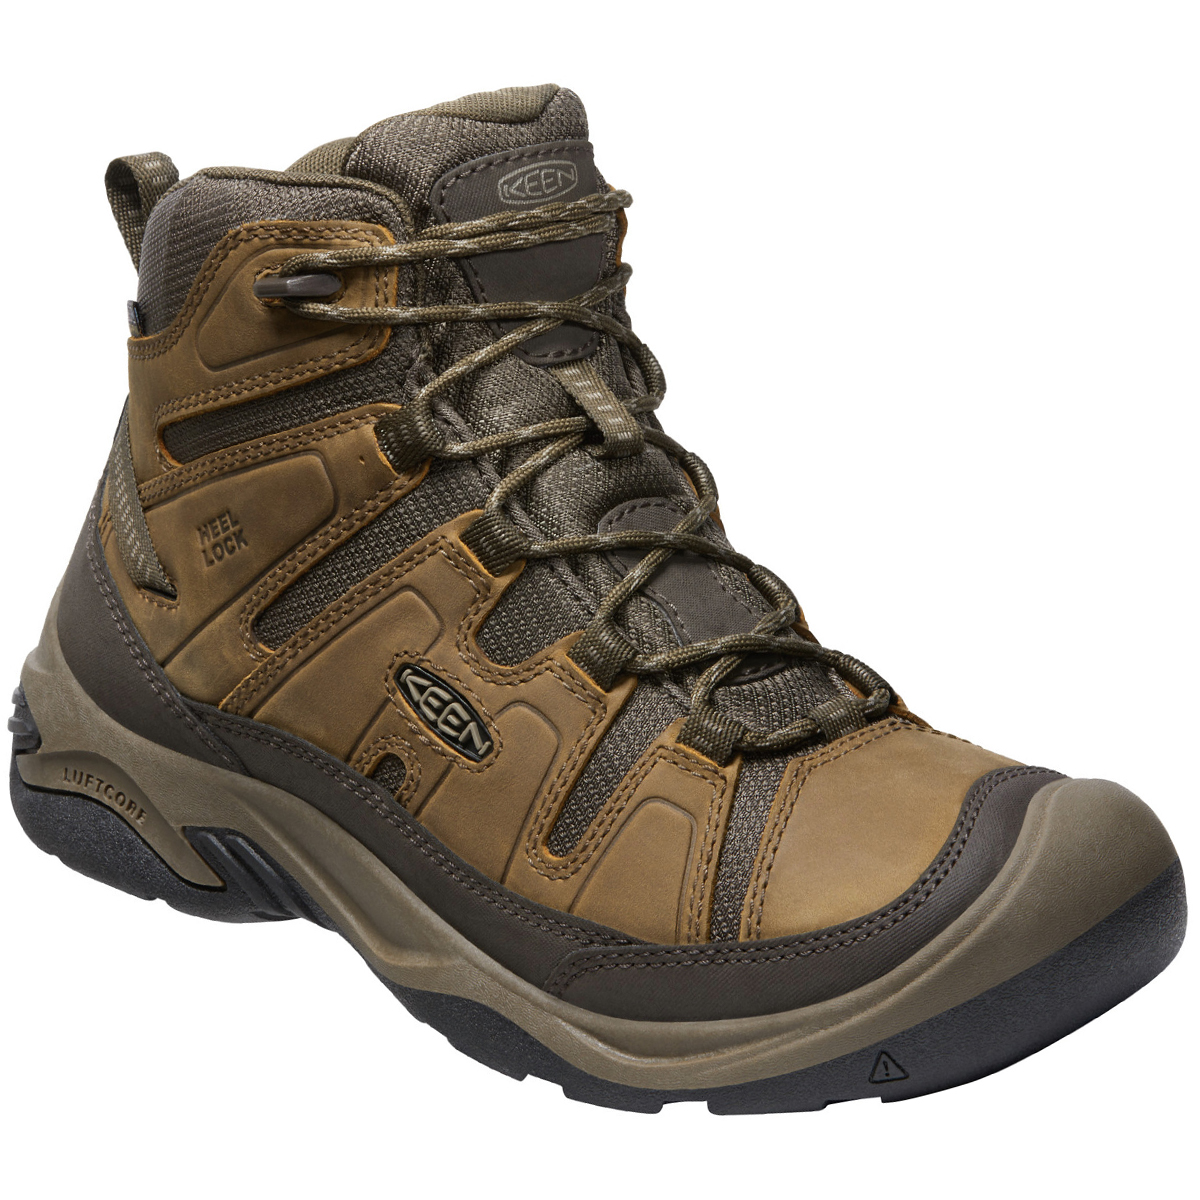 Keen Men's Circadia Mid Waterproof Hiking Boots - Size 13